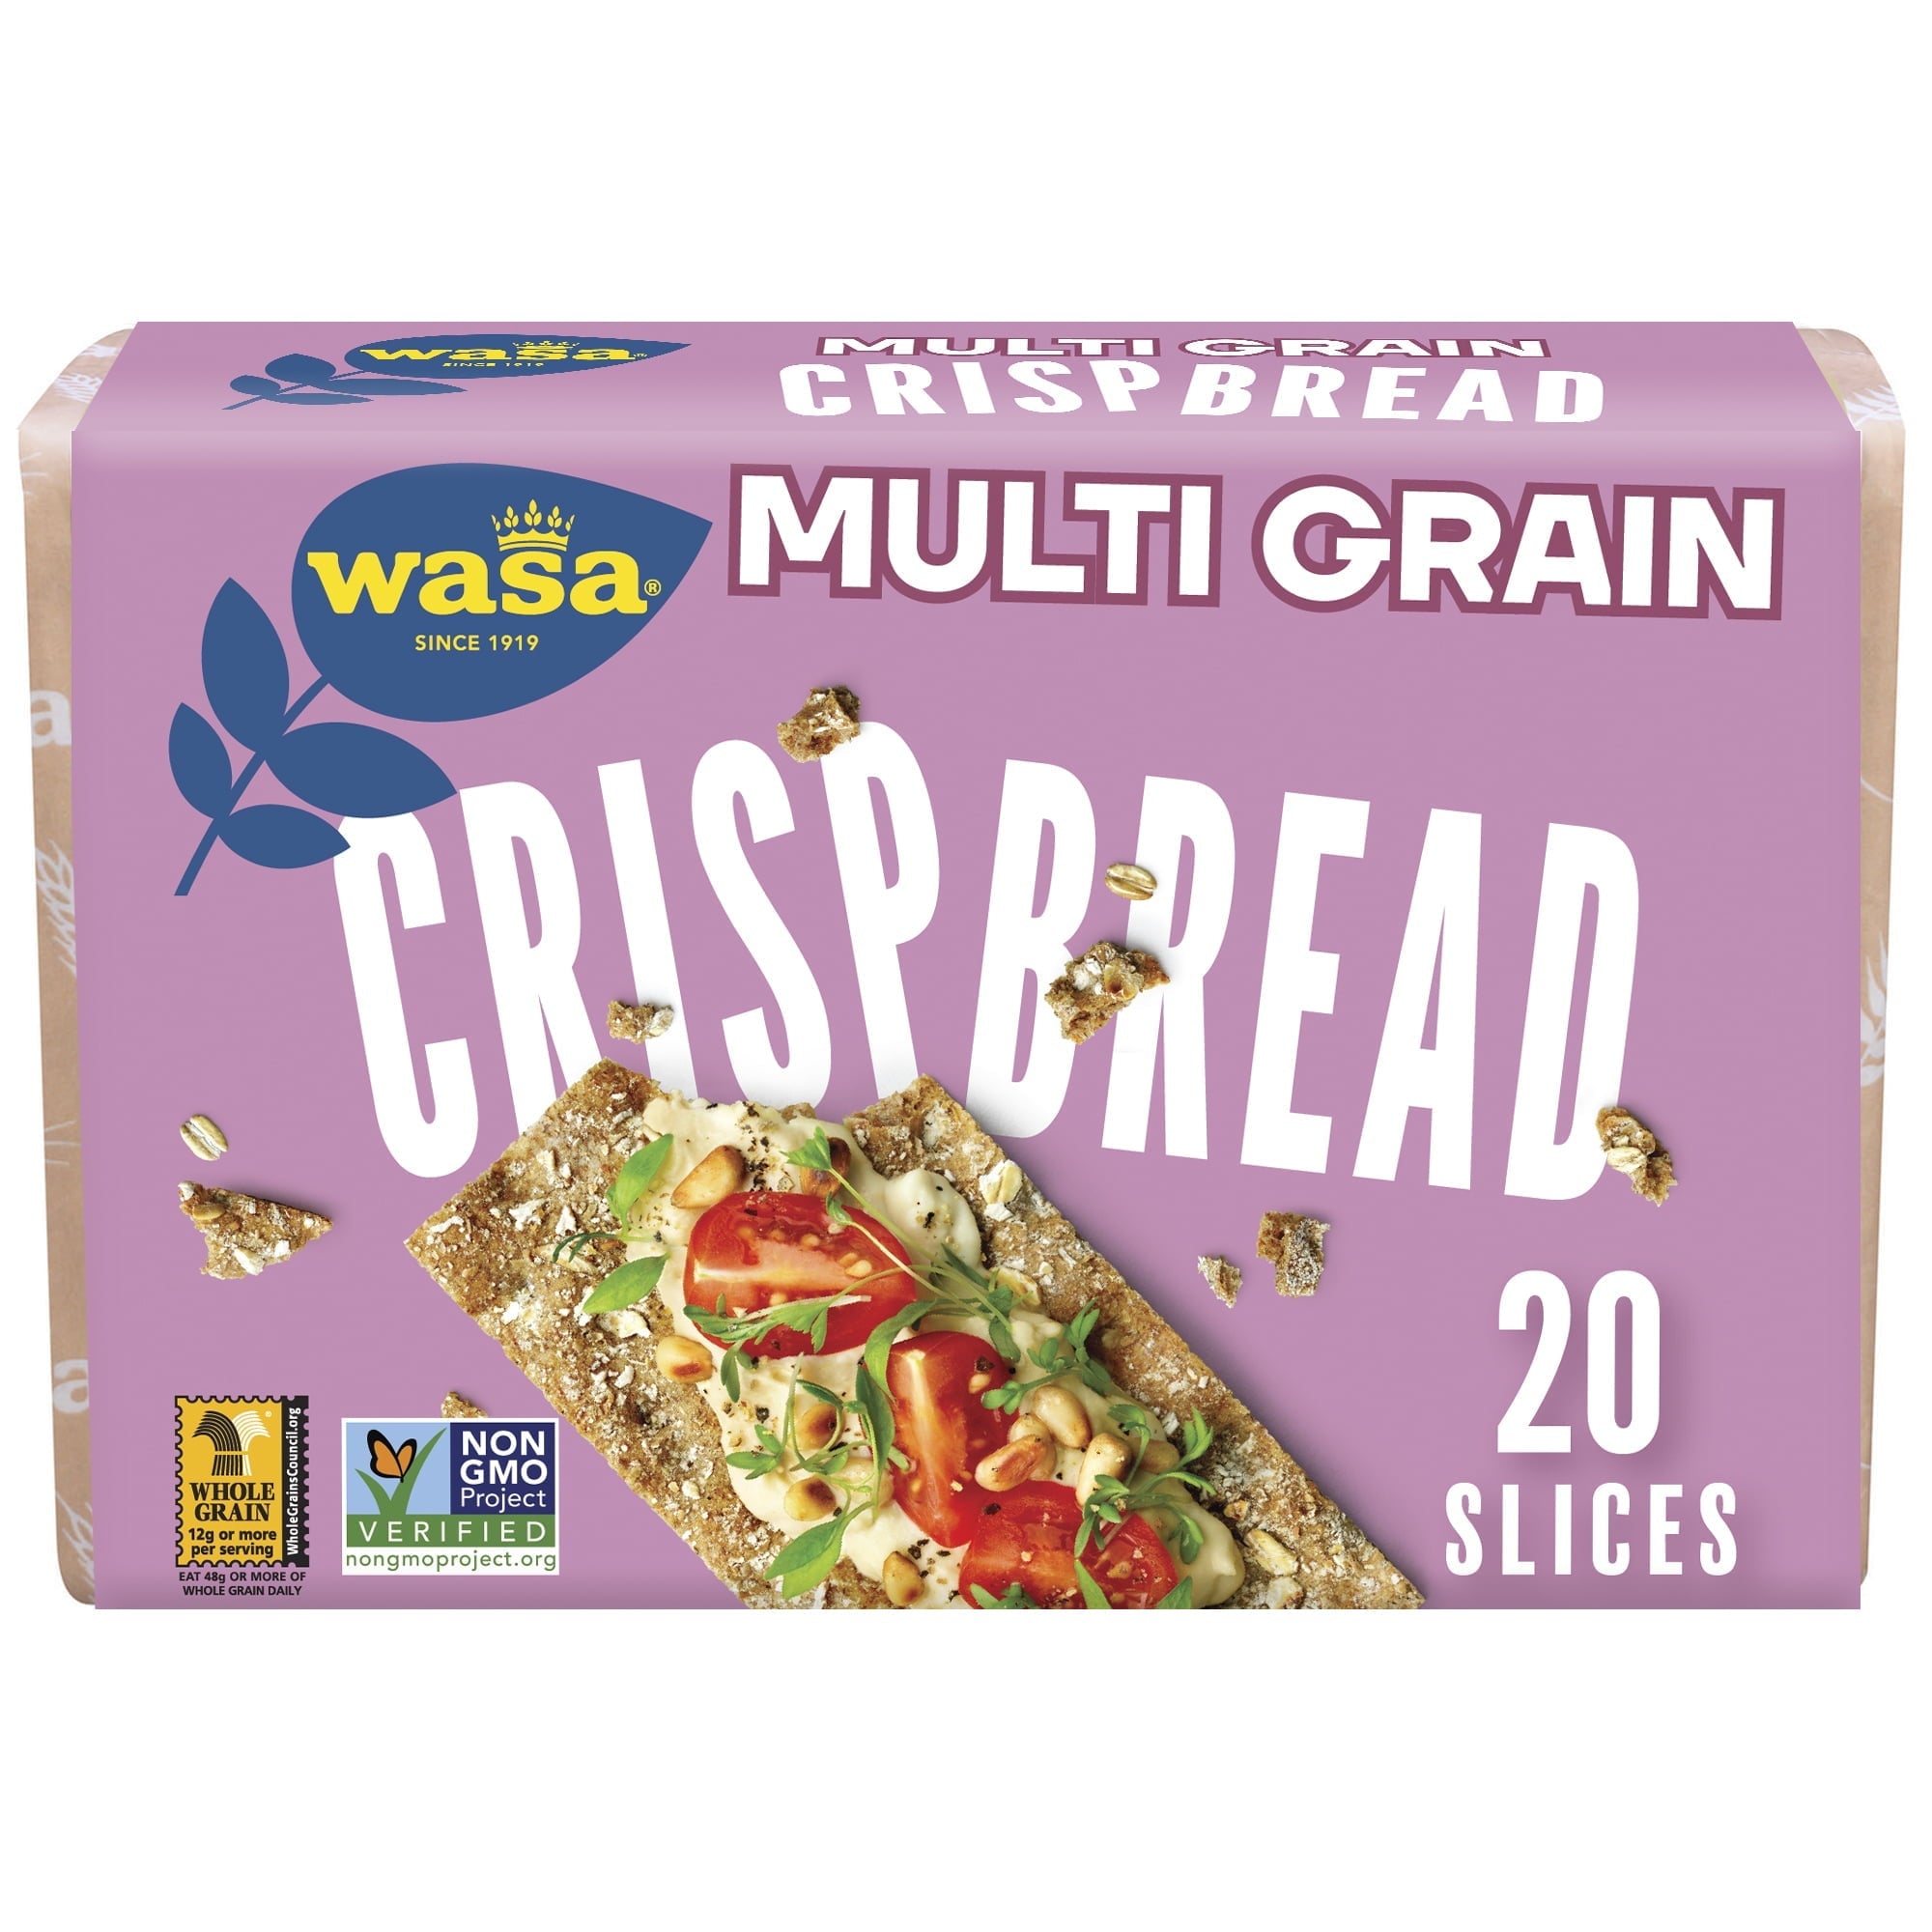 Wasa Crispbread Whole Grain Multi Grain 9.7 Oz